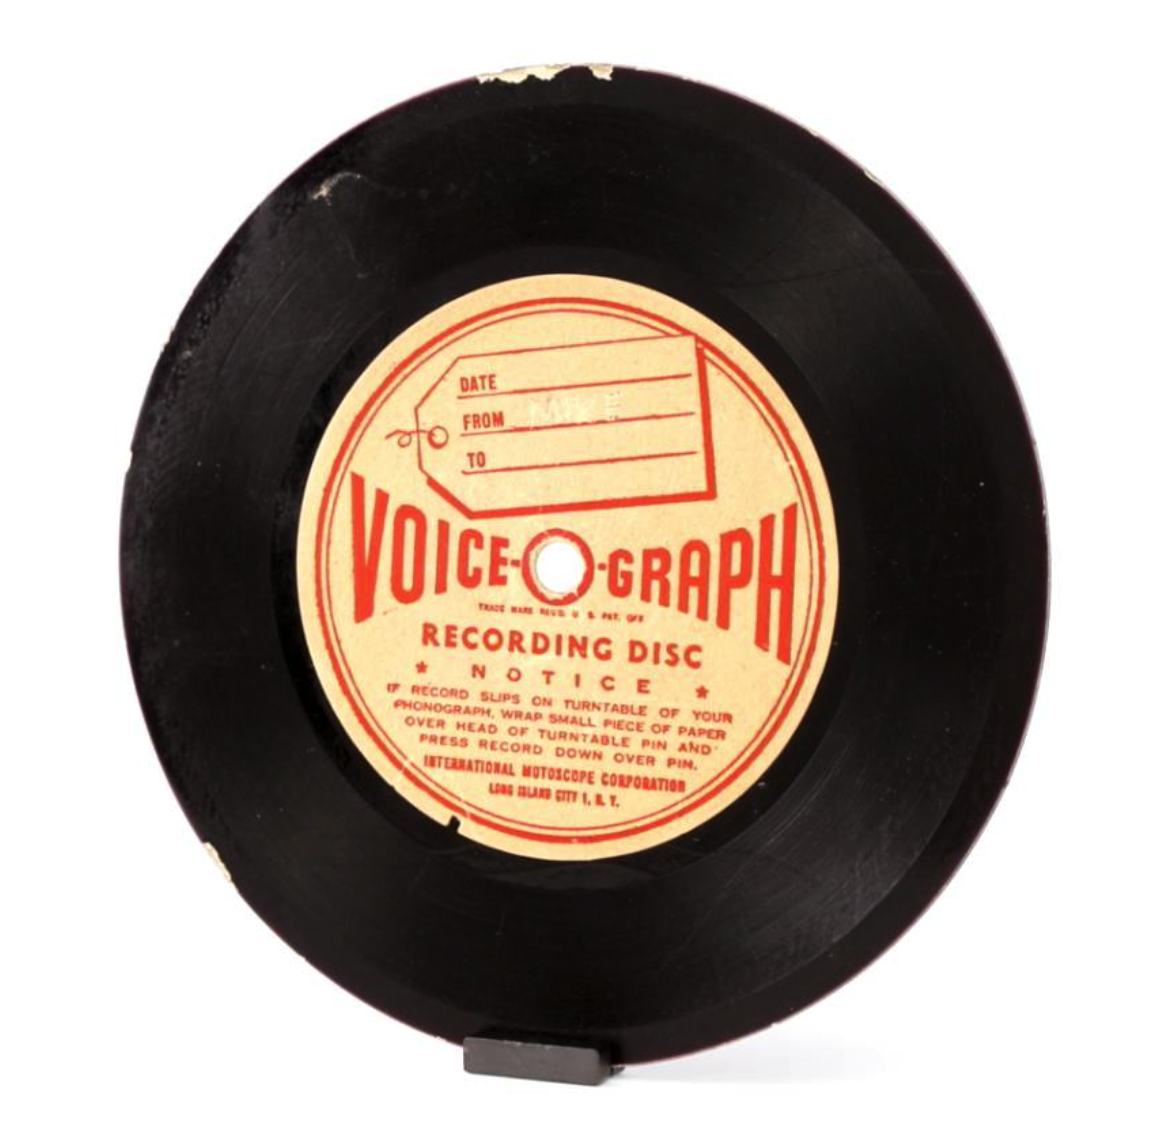 Voice O'Graph record